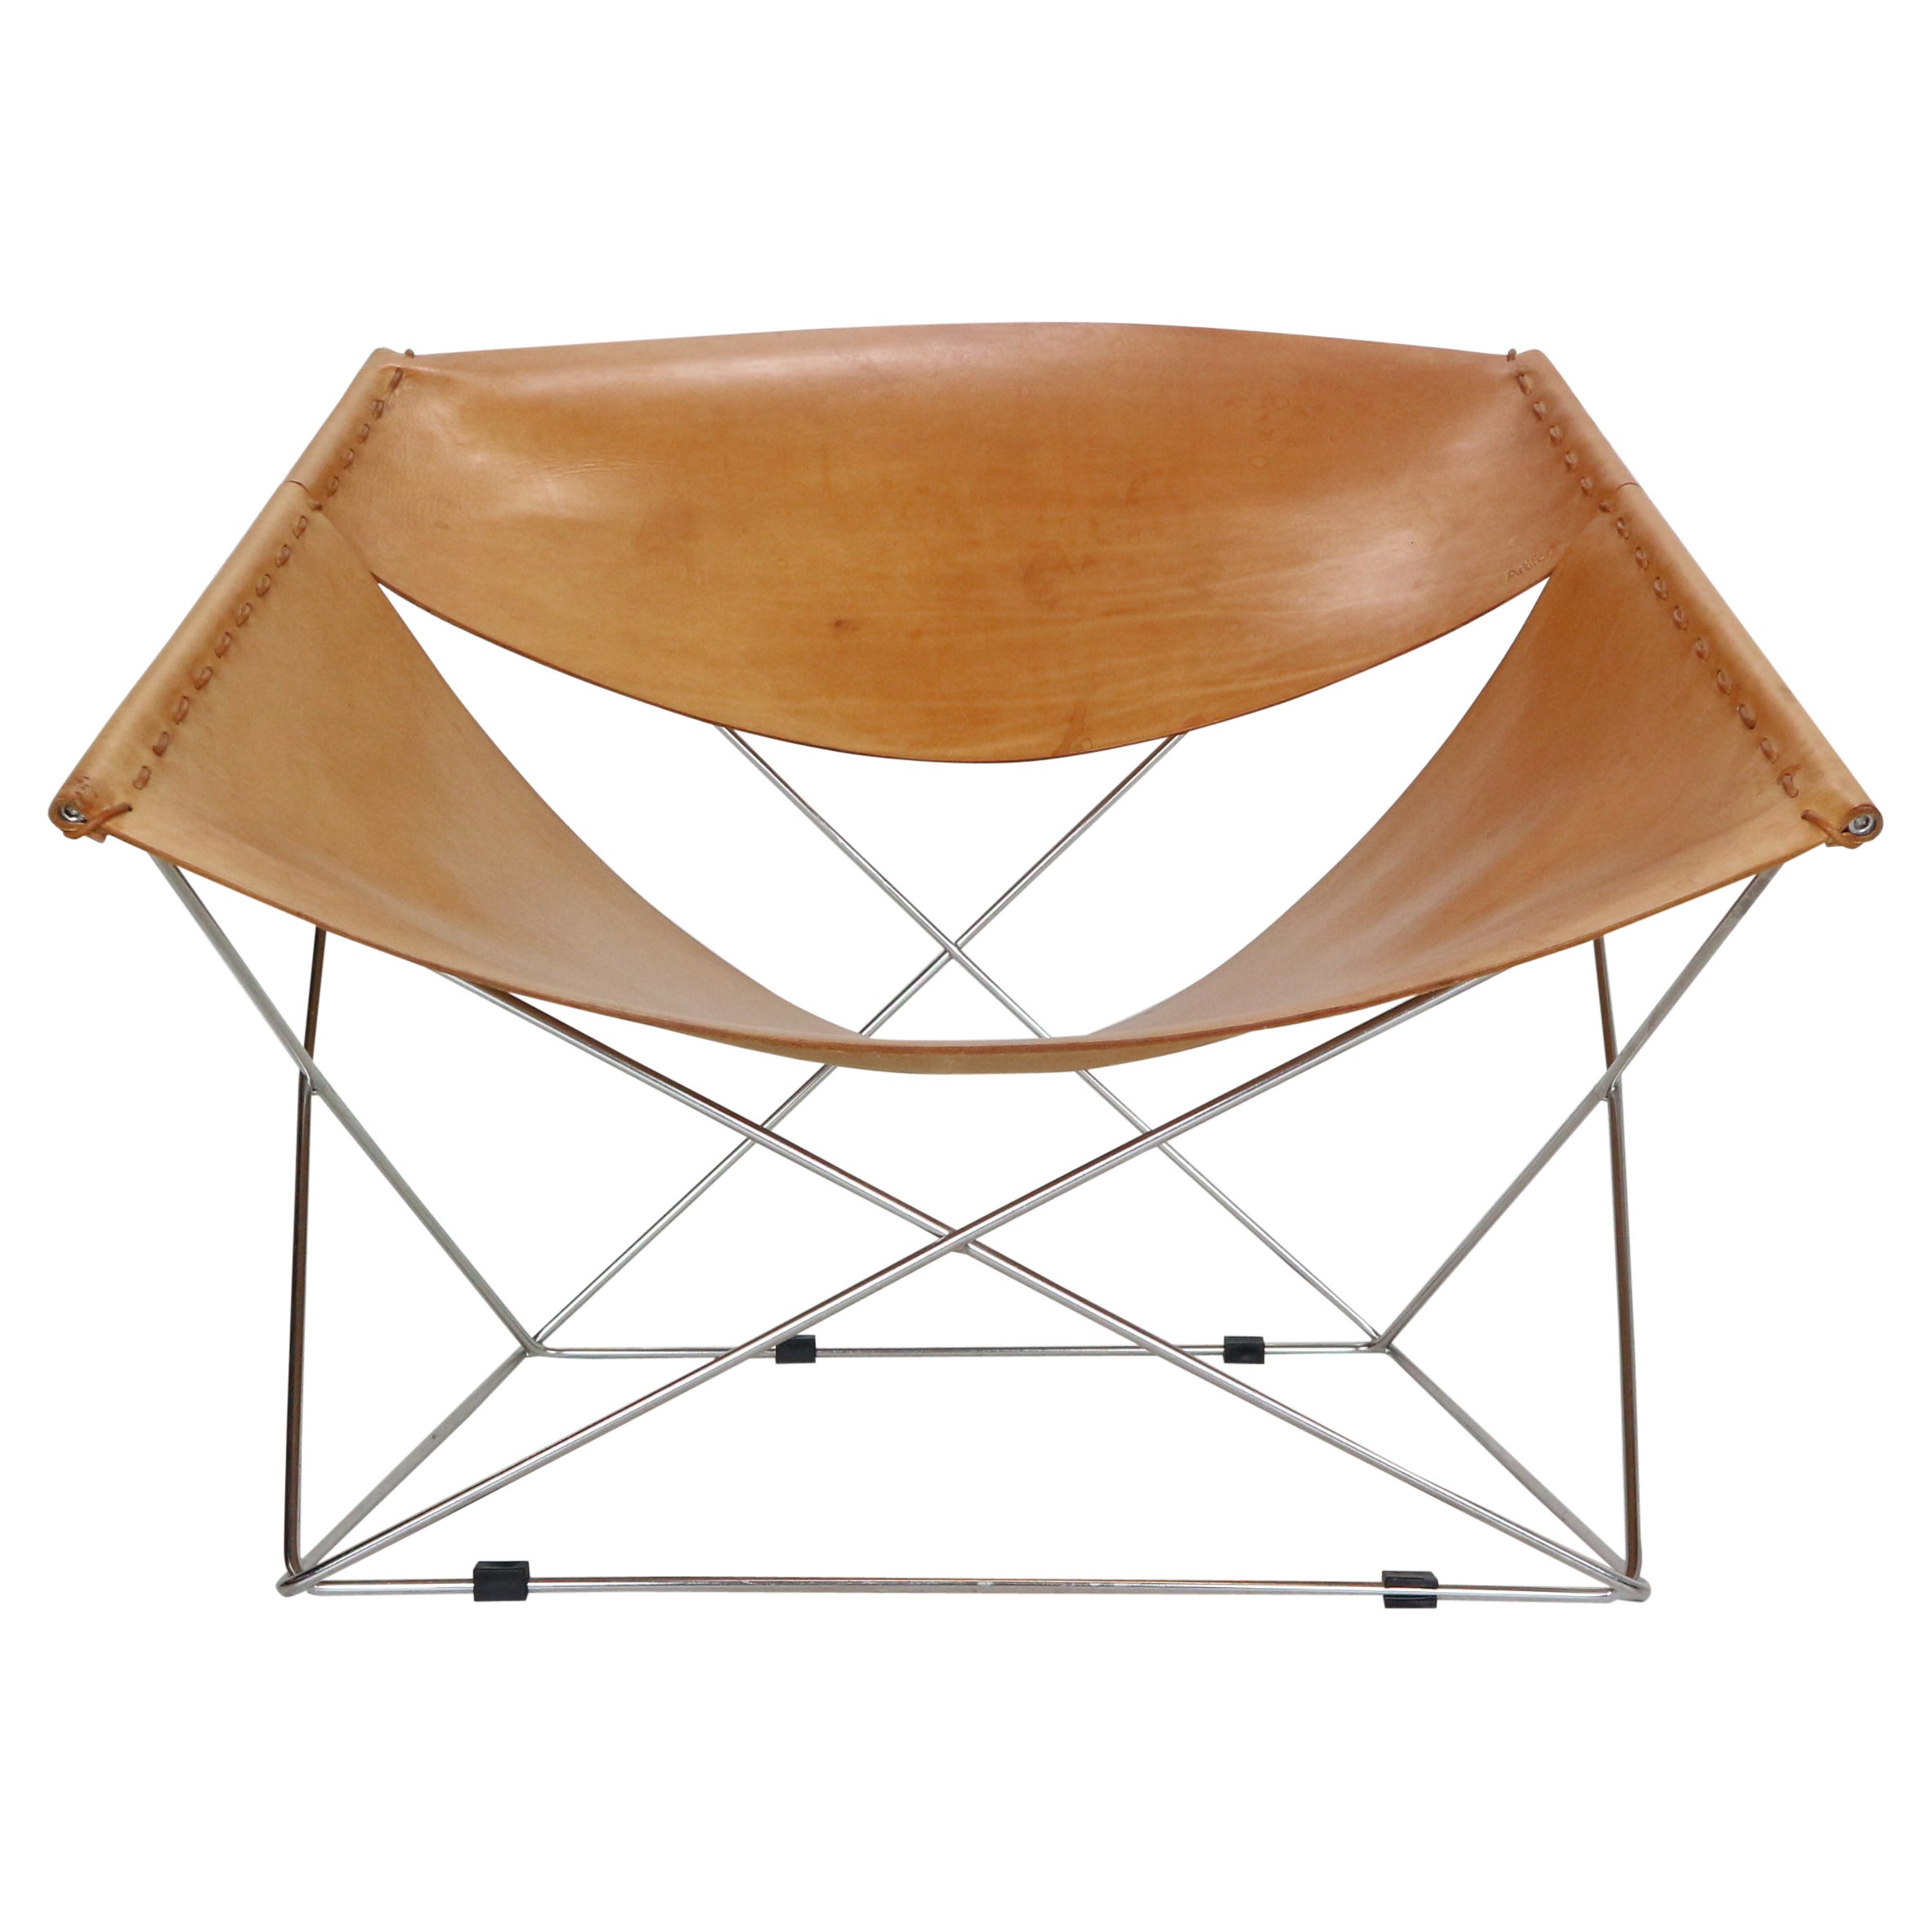 Pierre Paulin Cognac Leather "F675- Butterfly" Lounge Chair For Artifort, 1963